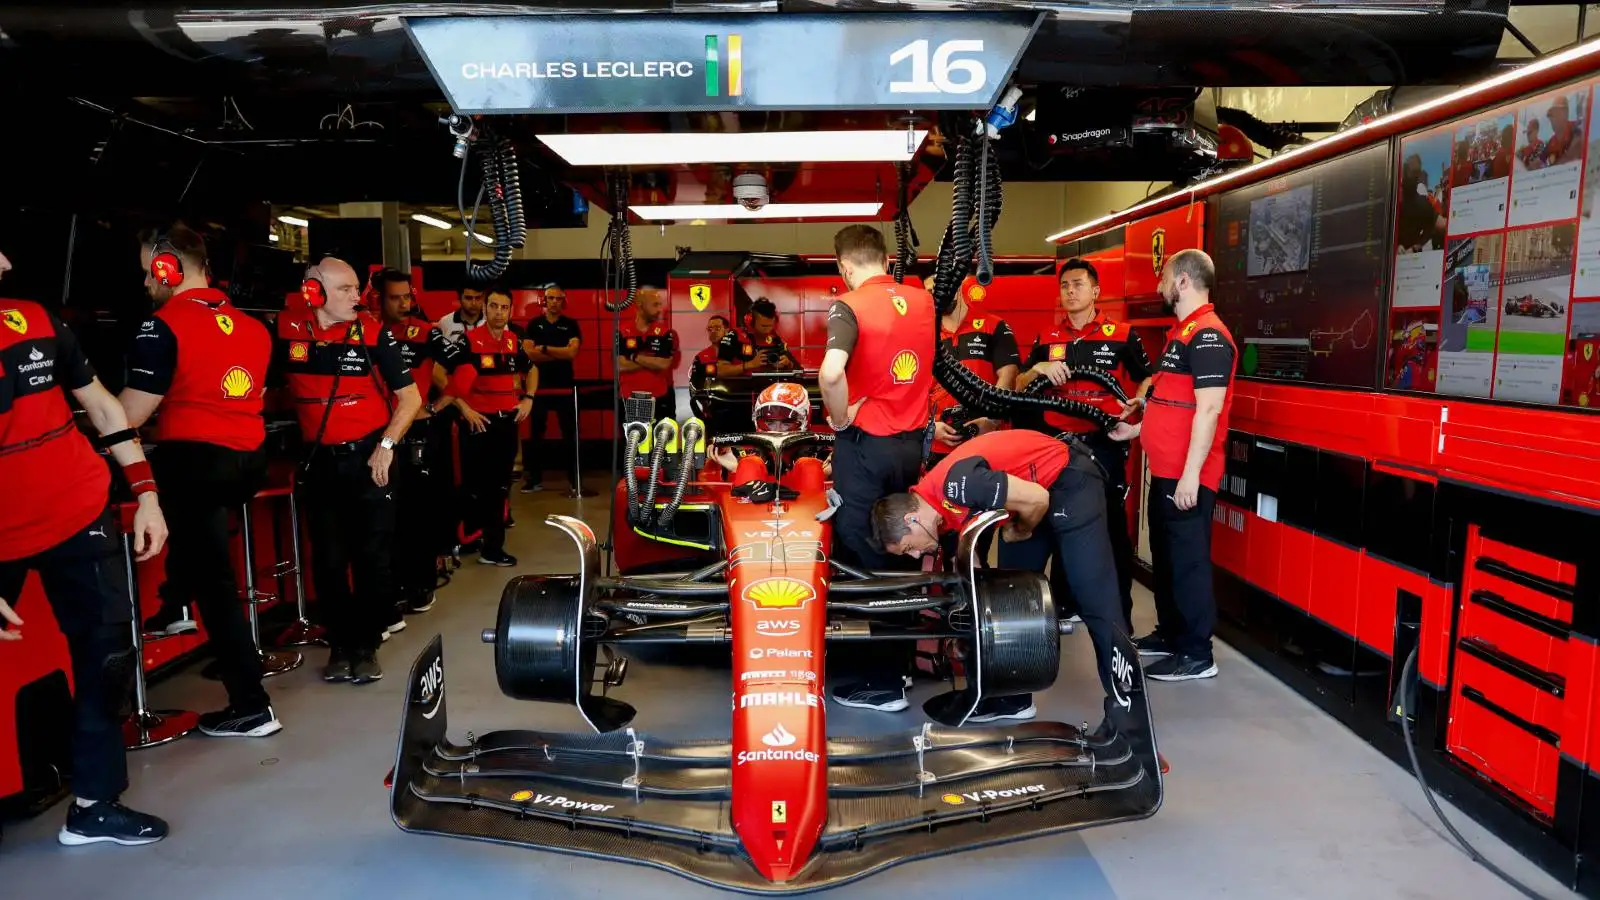 Charles Leclerc's car in the Ferrari garage. Baku June 2022.